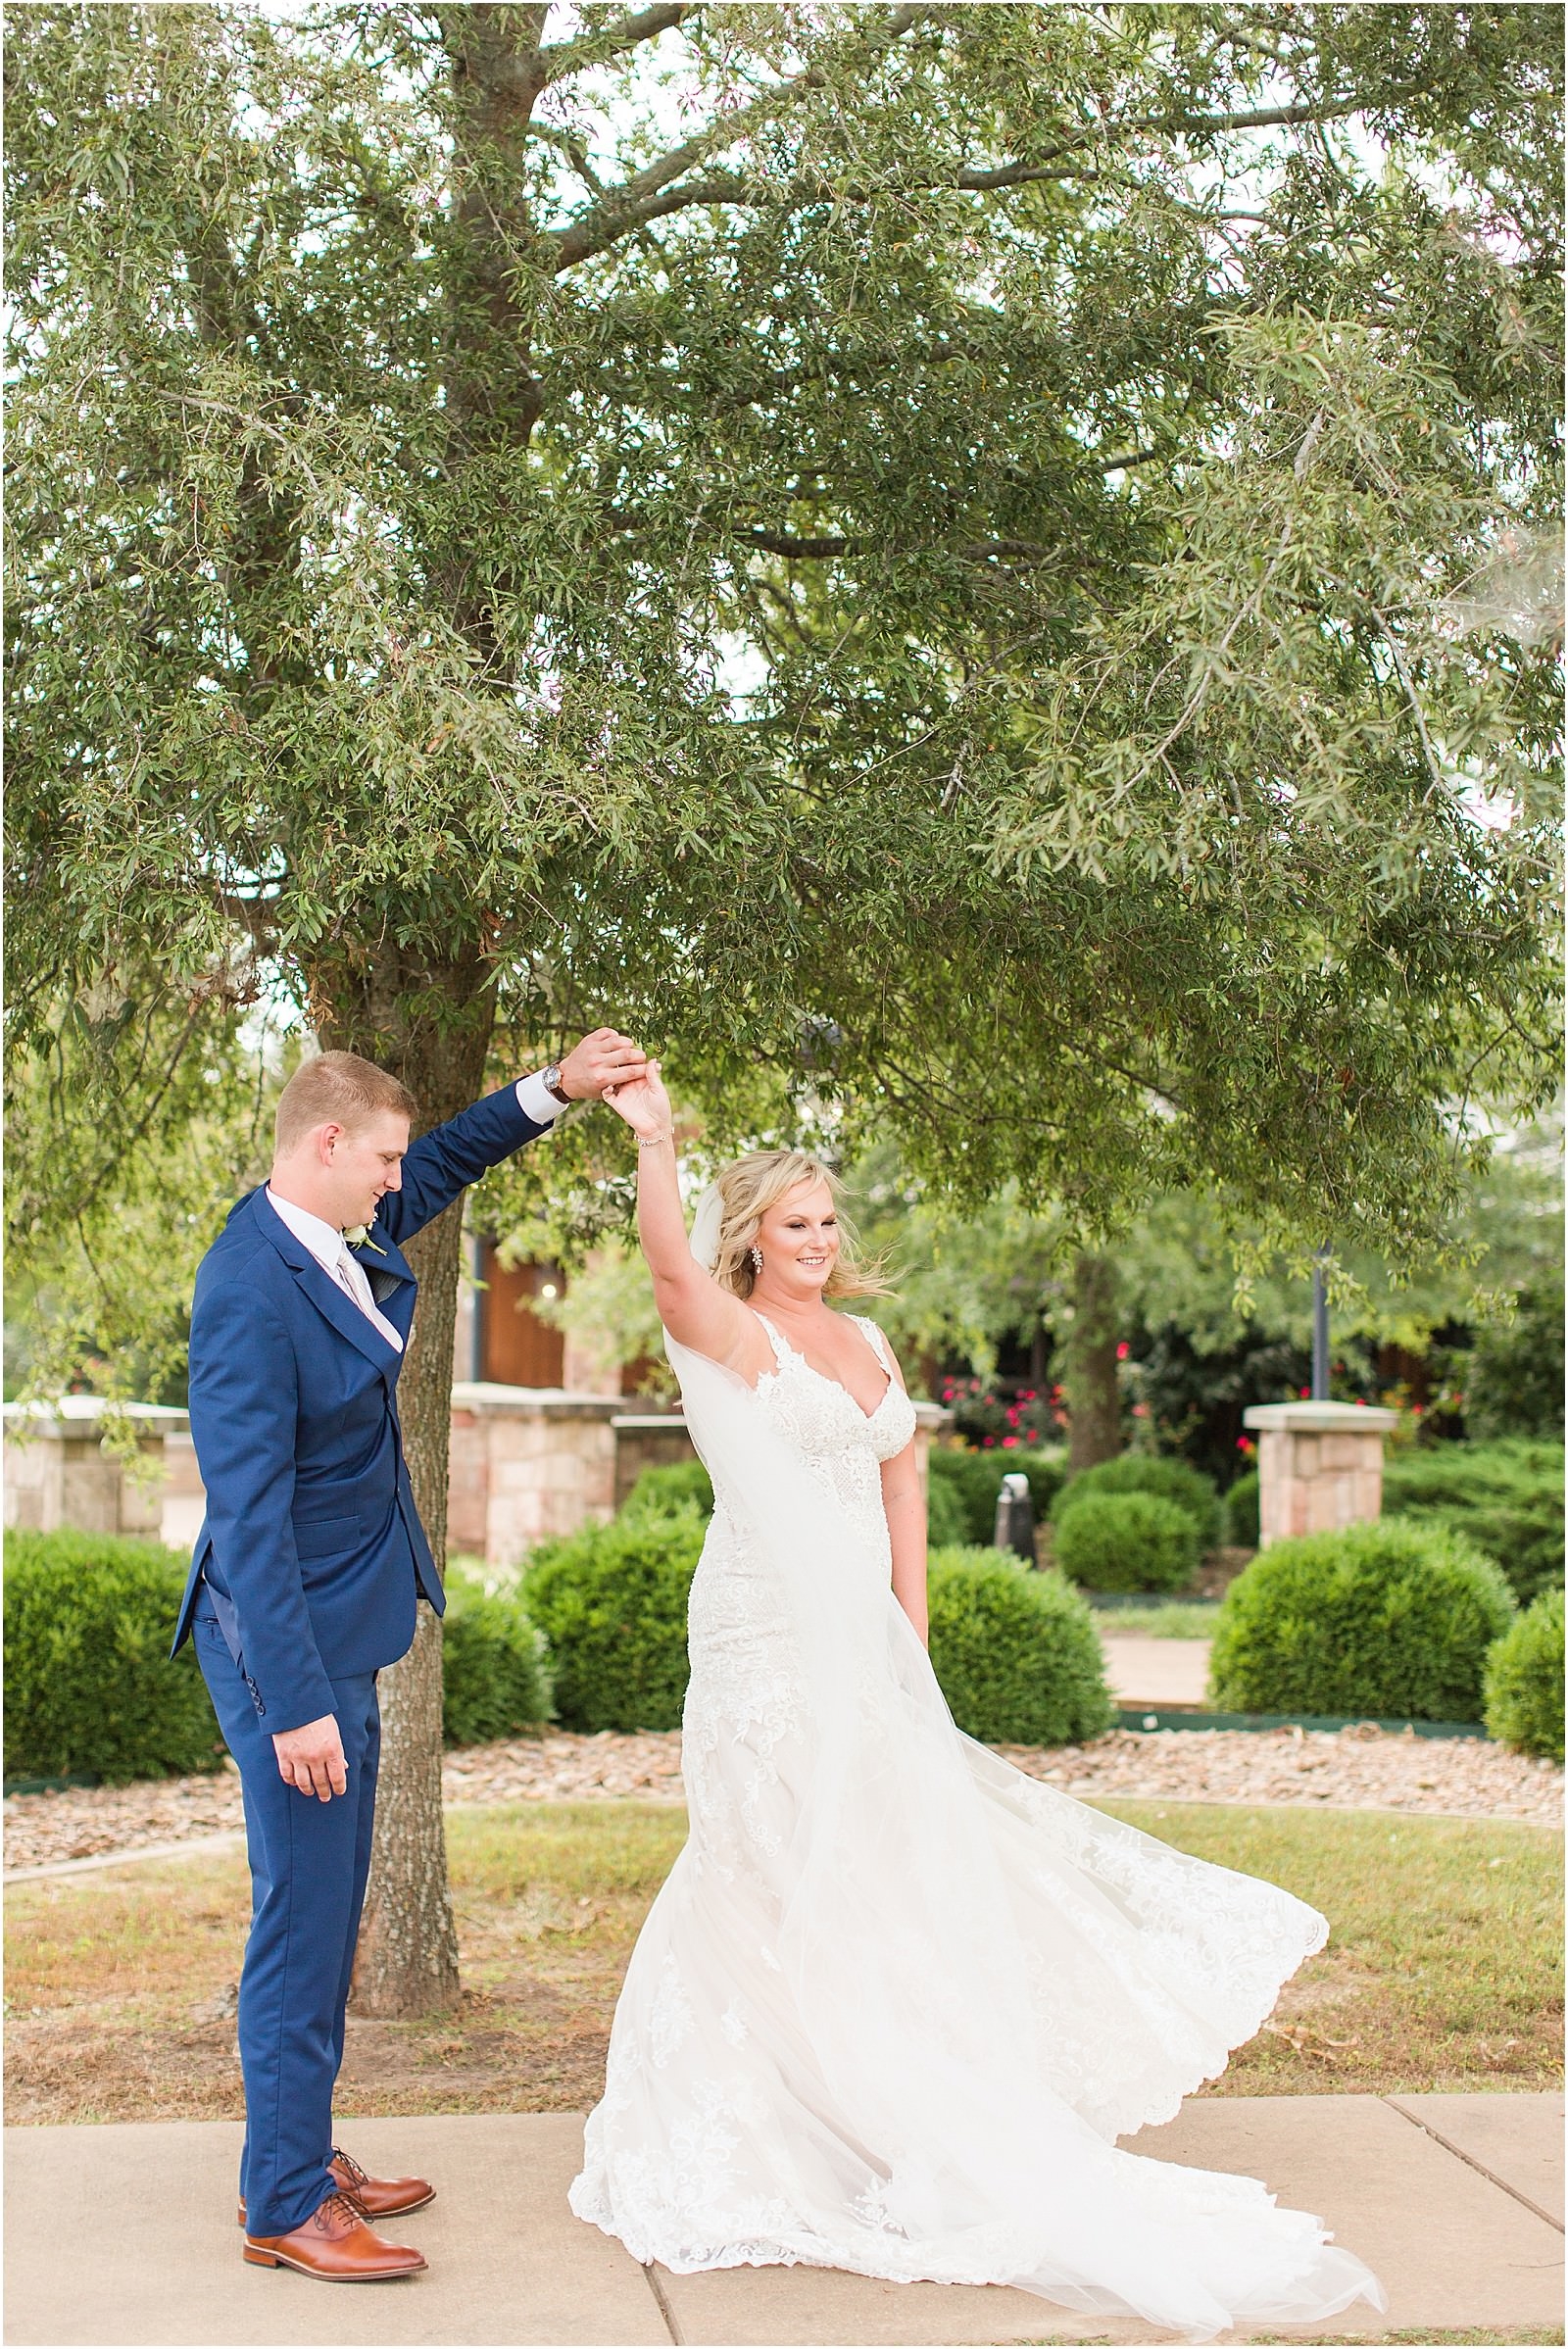 Kelsey and Caleb | Walkers Bluff Winery Wedding | Bret and Brandie Photography043.jpg